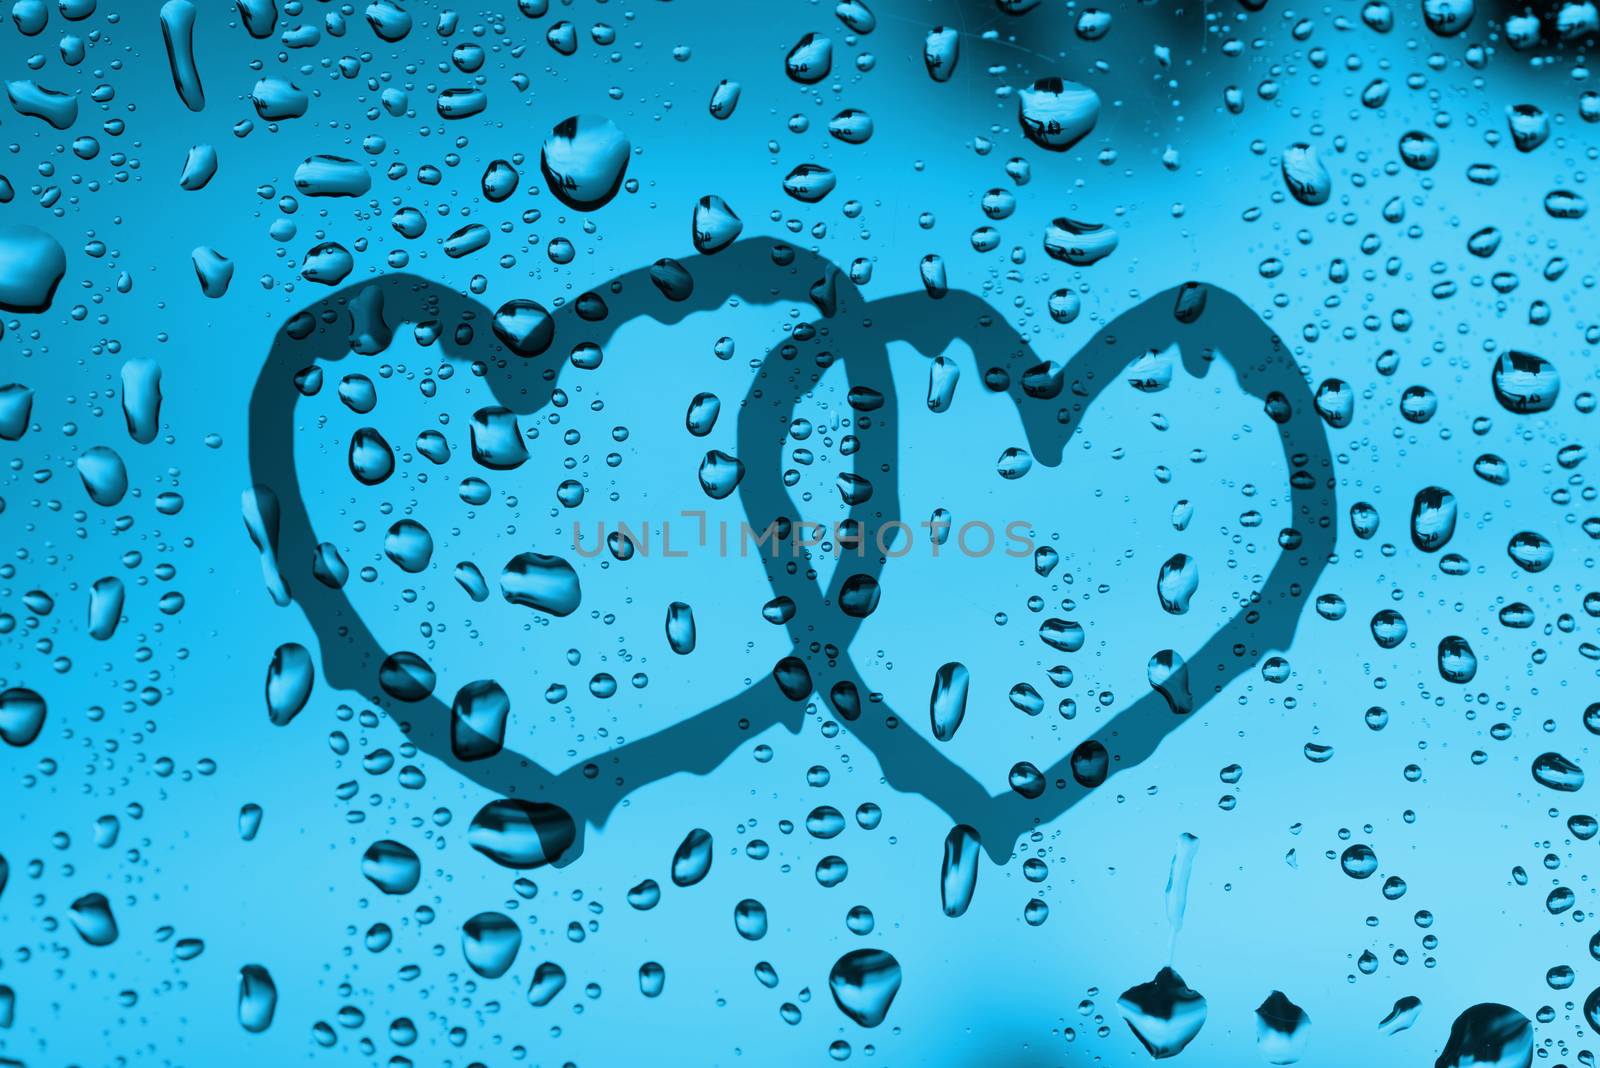 couple heart draw on water drops  glass window